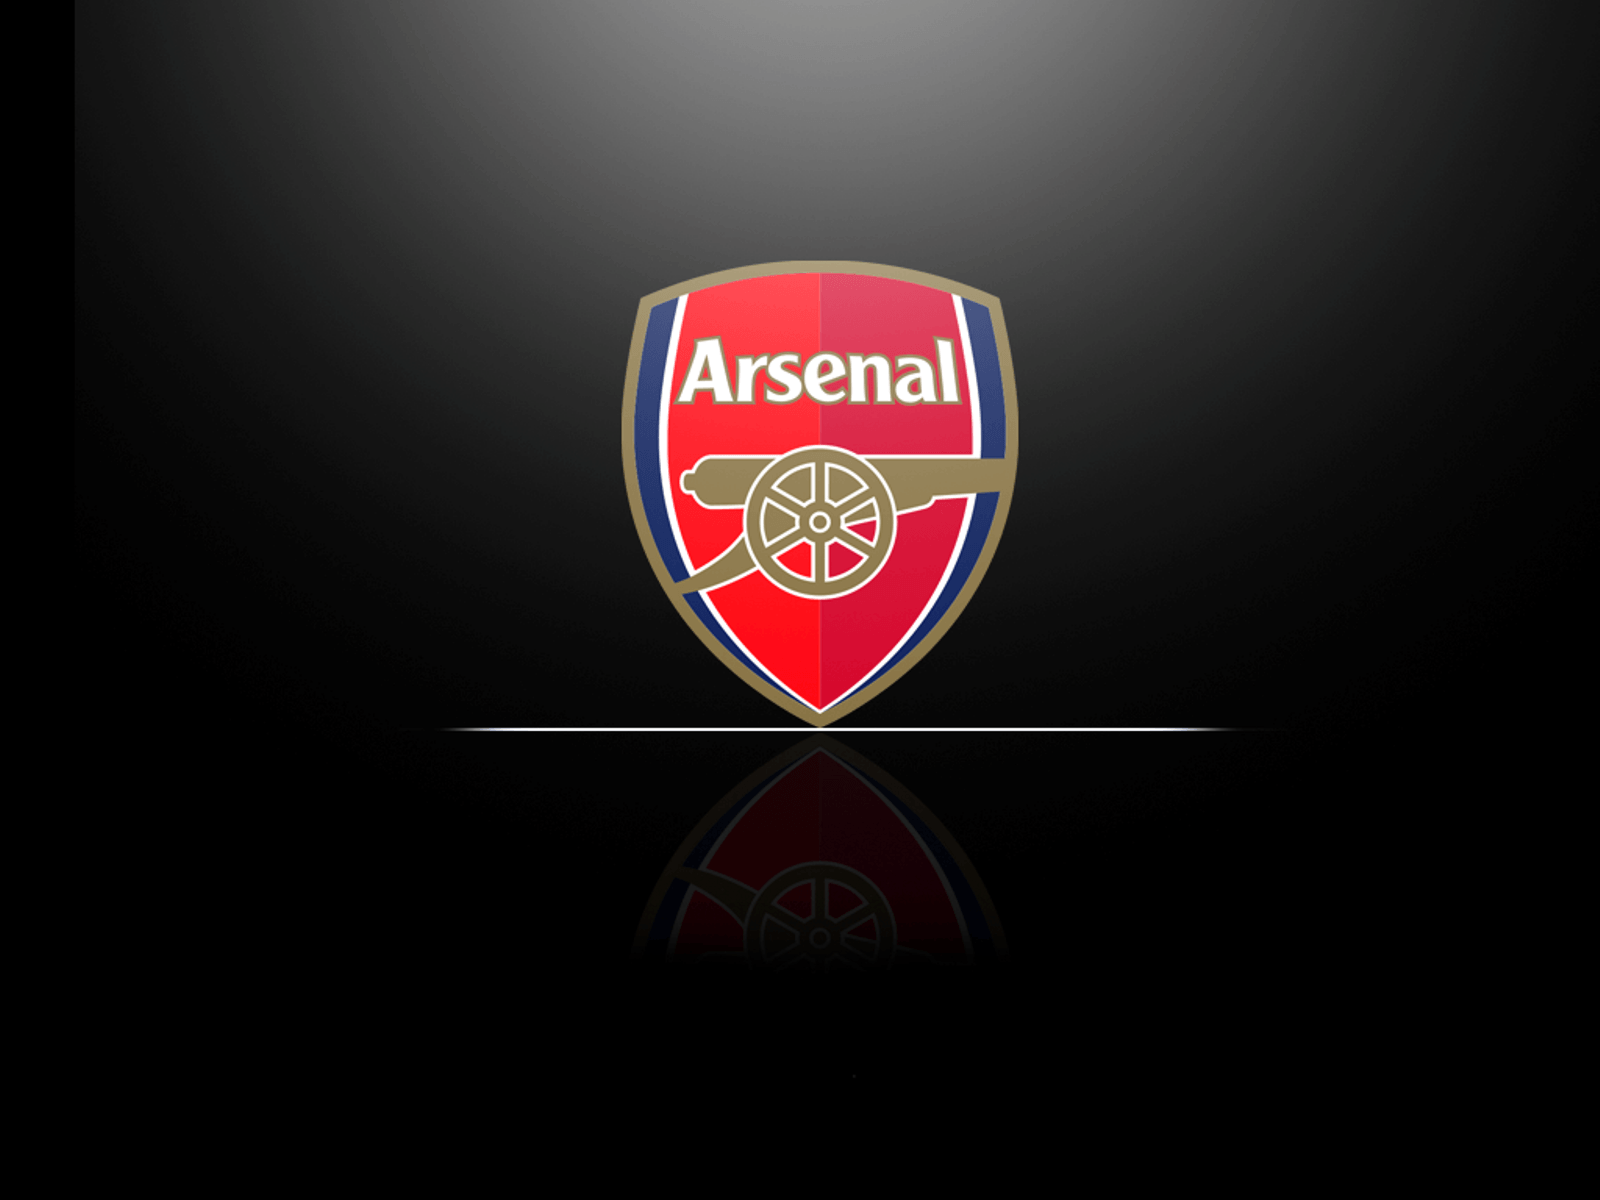 Arsenal Logo Wallpapers Top Free Arsenal Logo Backgrounds